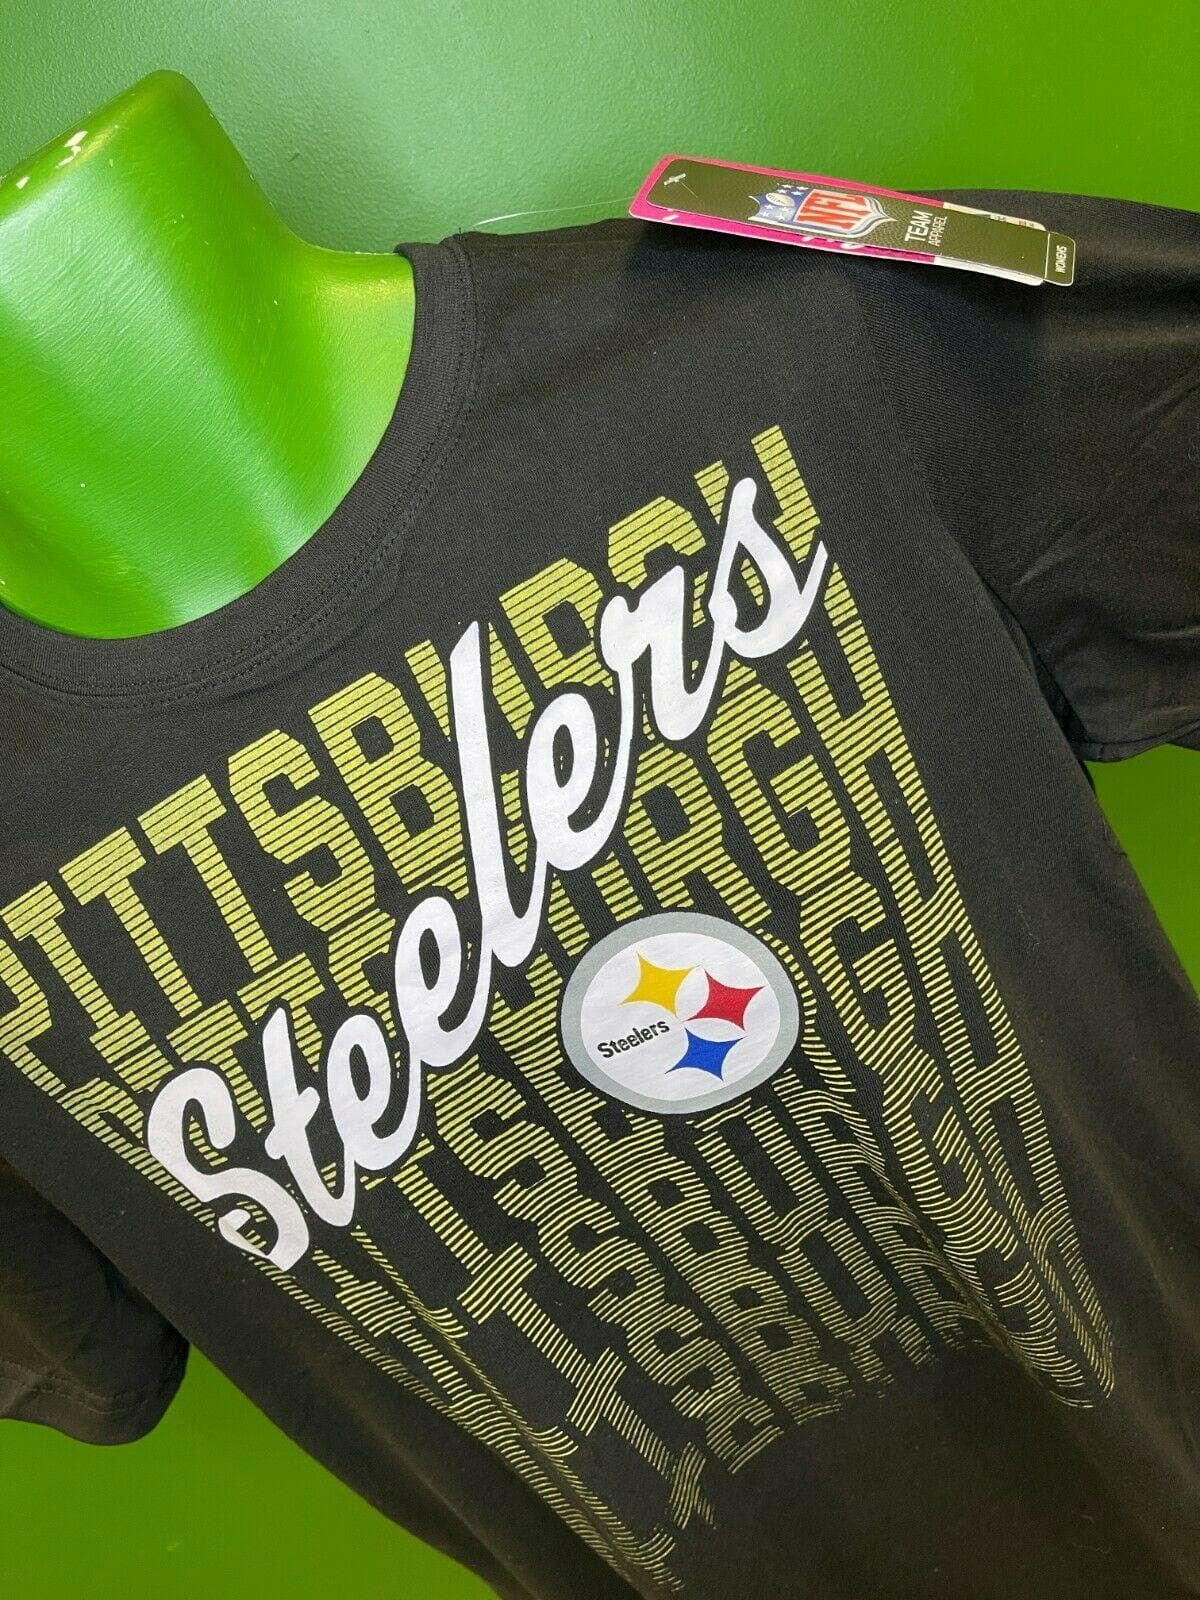 NFL Pittsburgh Steelers Majestic Women's Plus Size T-Shirt Medium NWT